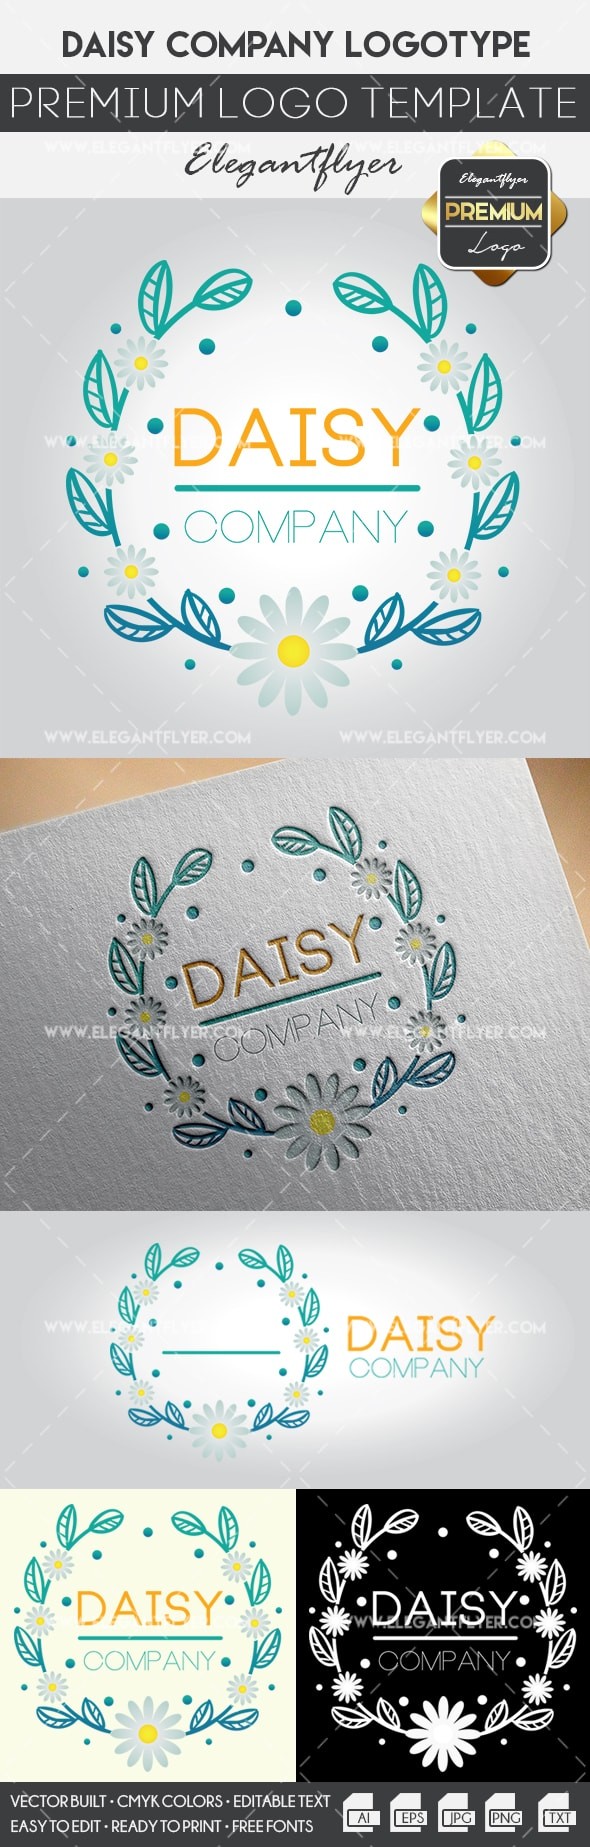 Daisy Company -> Société Daisy by ElegantFlyer